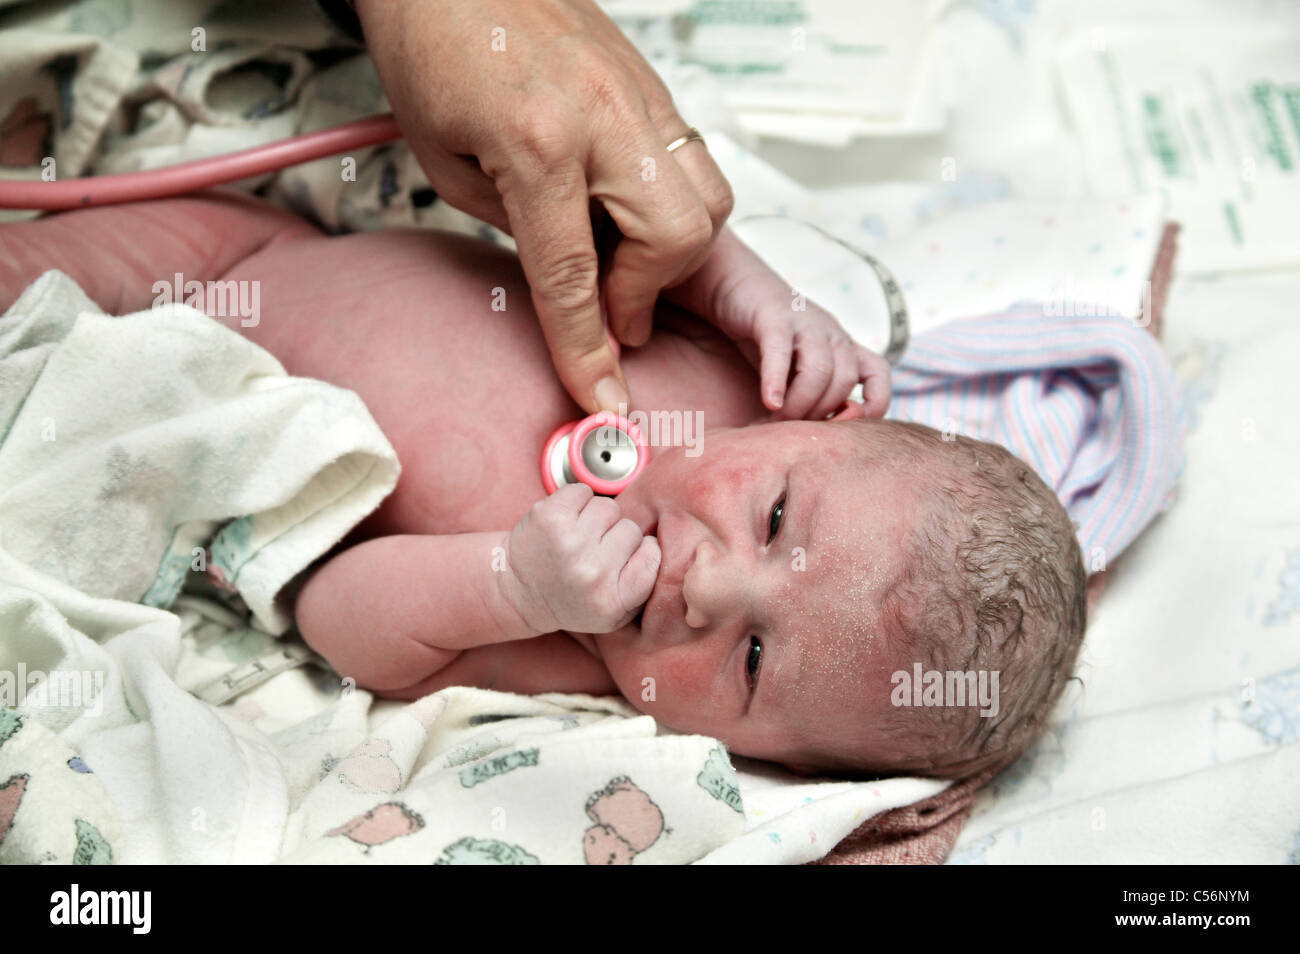 Newborn, midwife using stethoscope Stock Photo